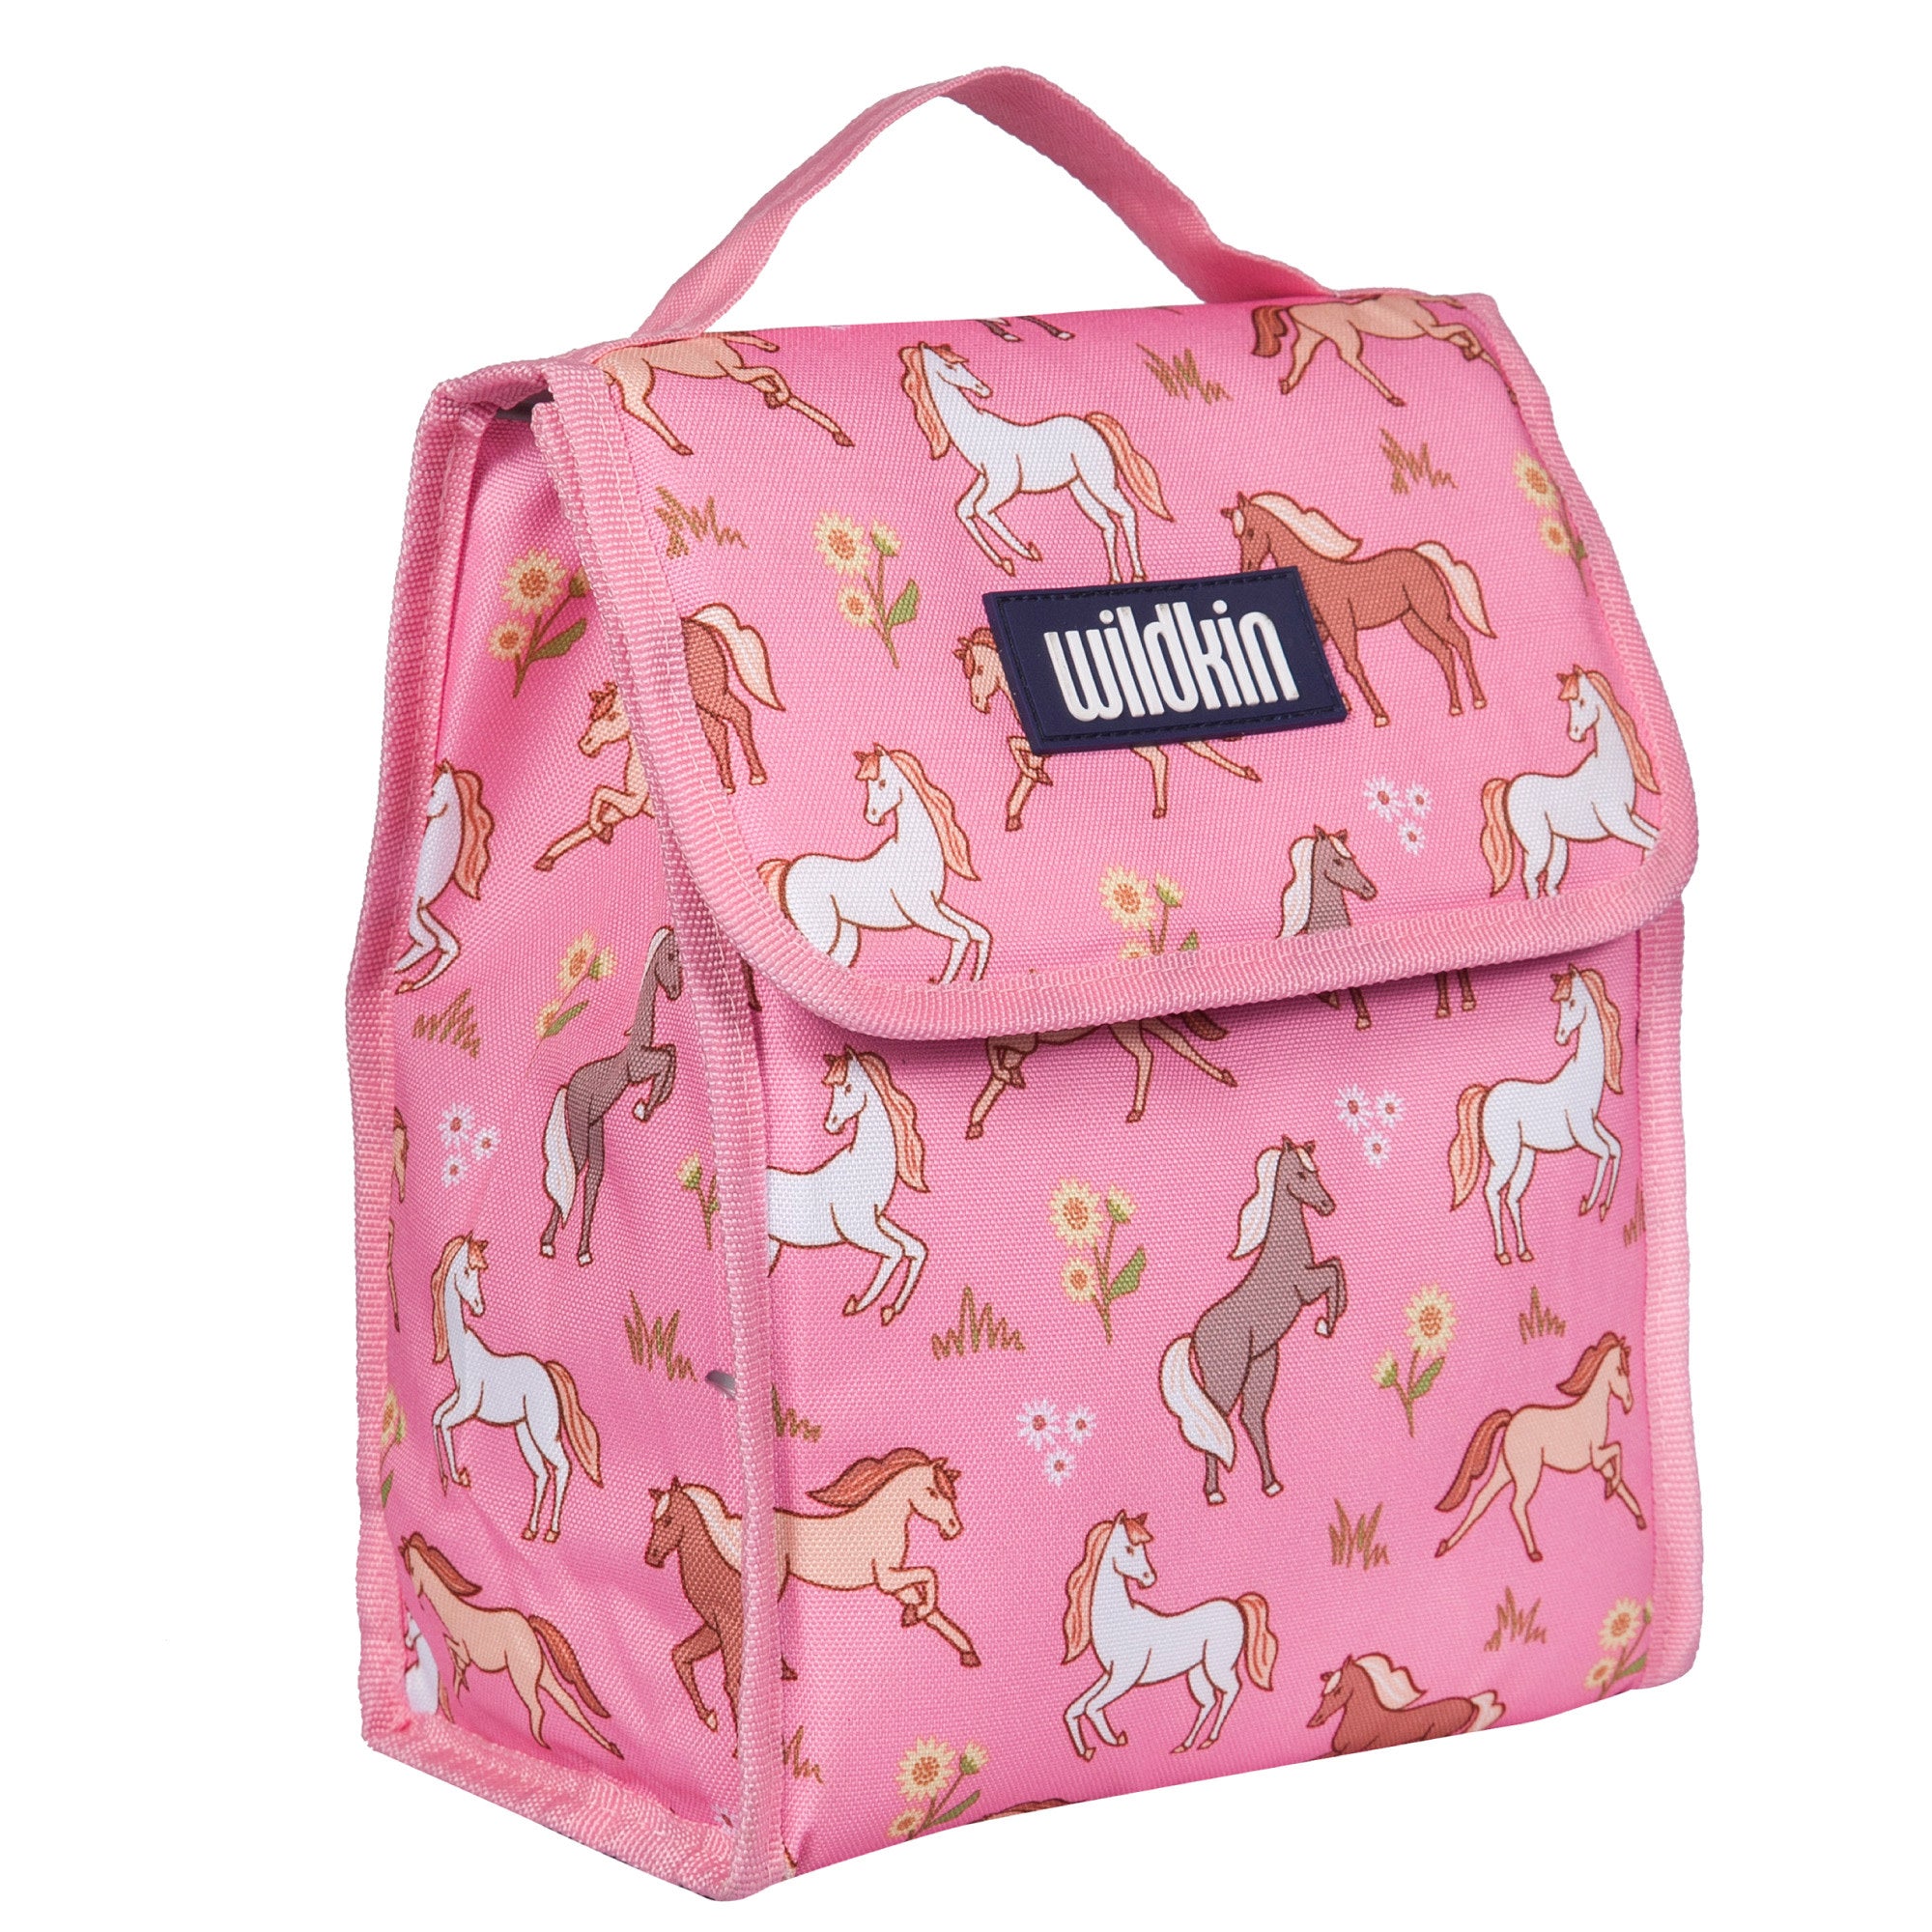 Wildkin Horses 15 Backpack - Pink